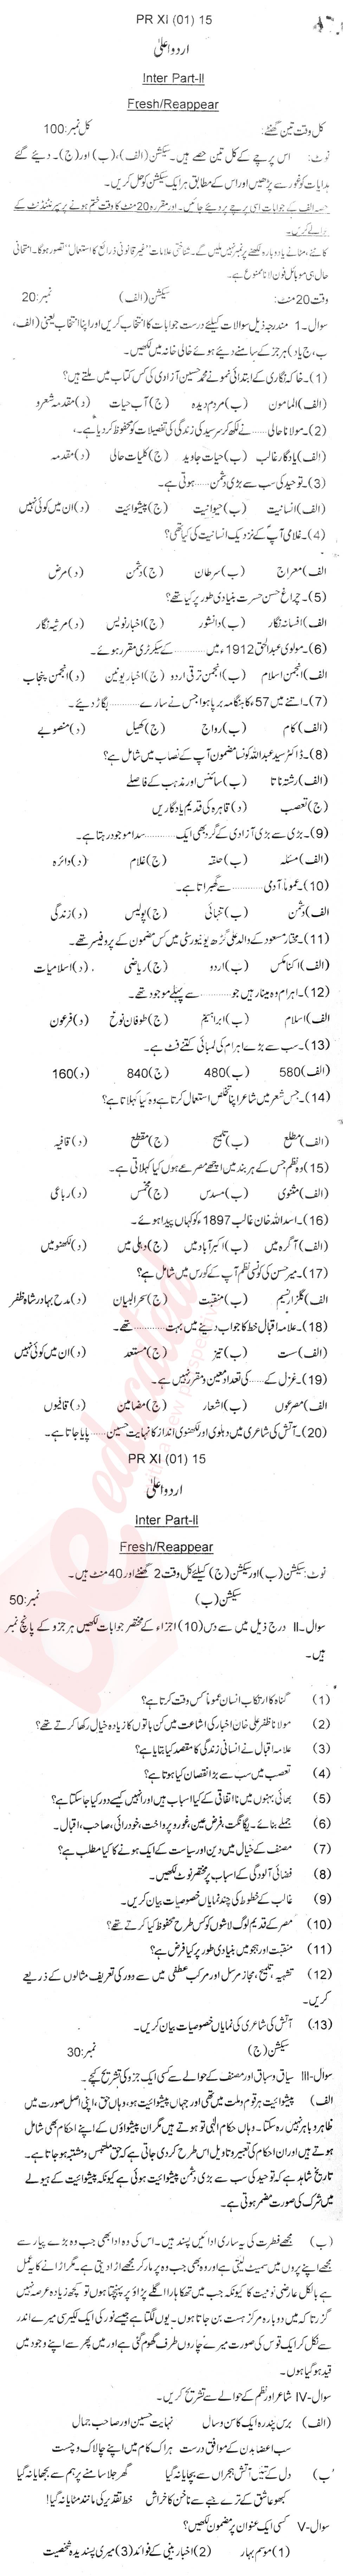 Urdu 12th class Past Paper Group 1 BISE Swat 2015